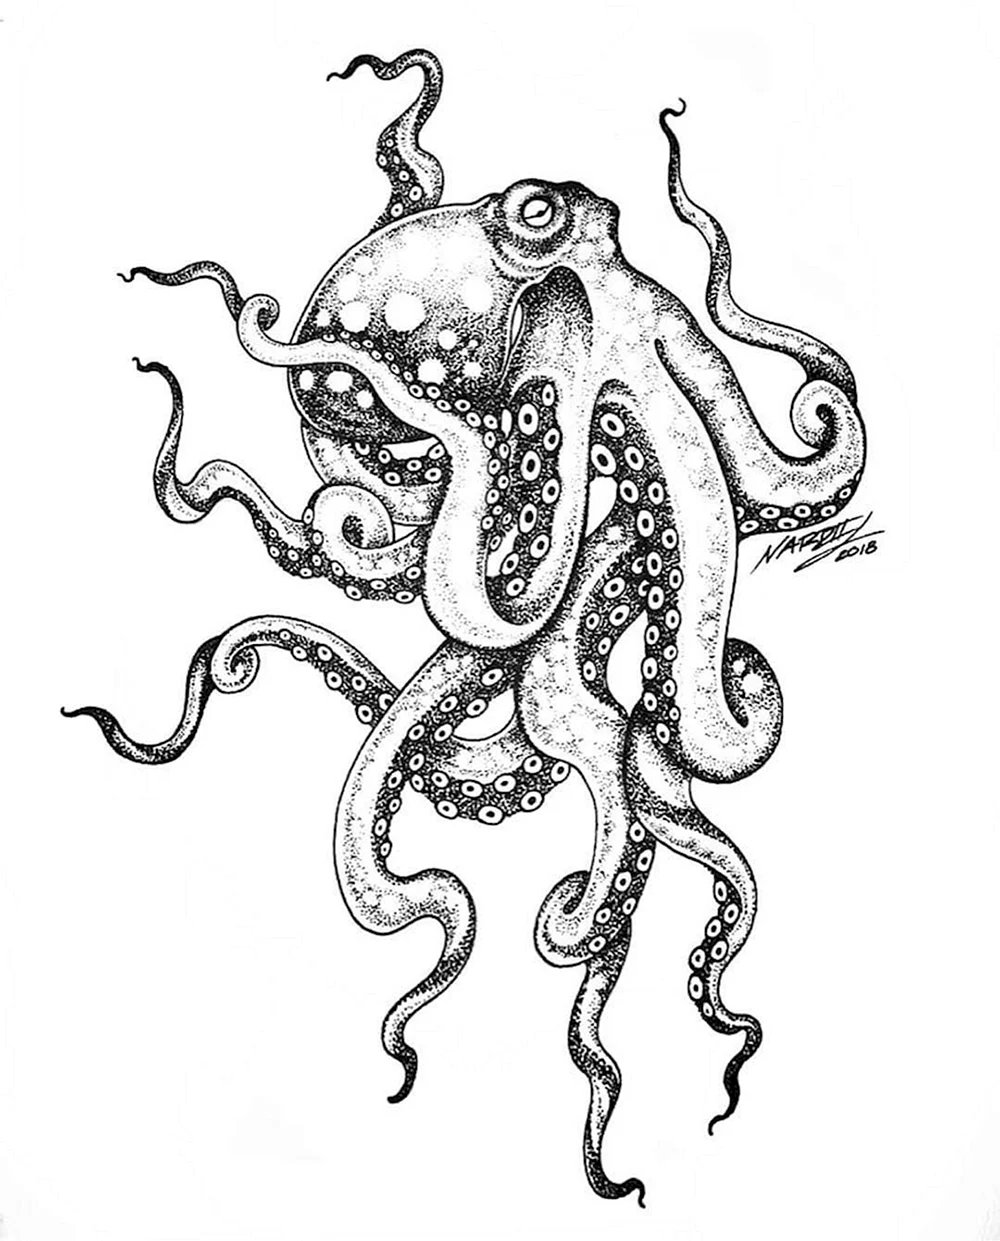 Octopus dotwork